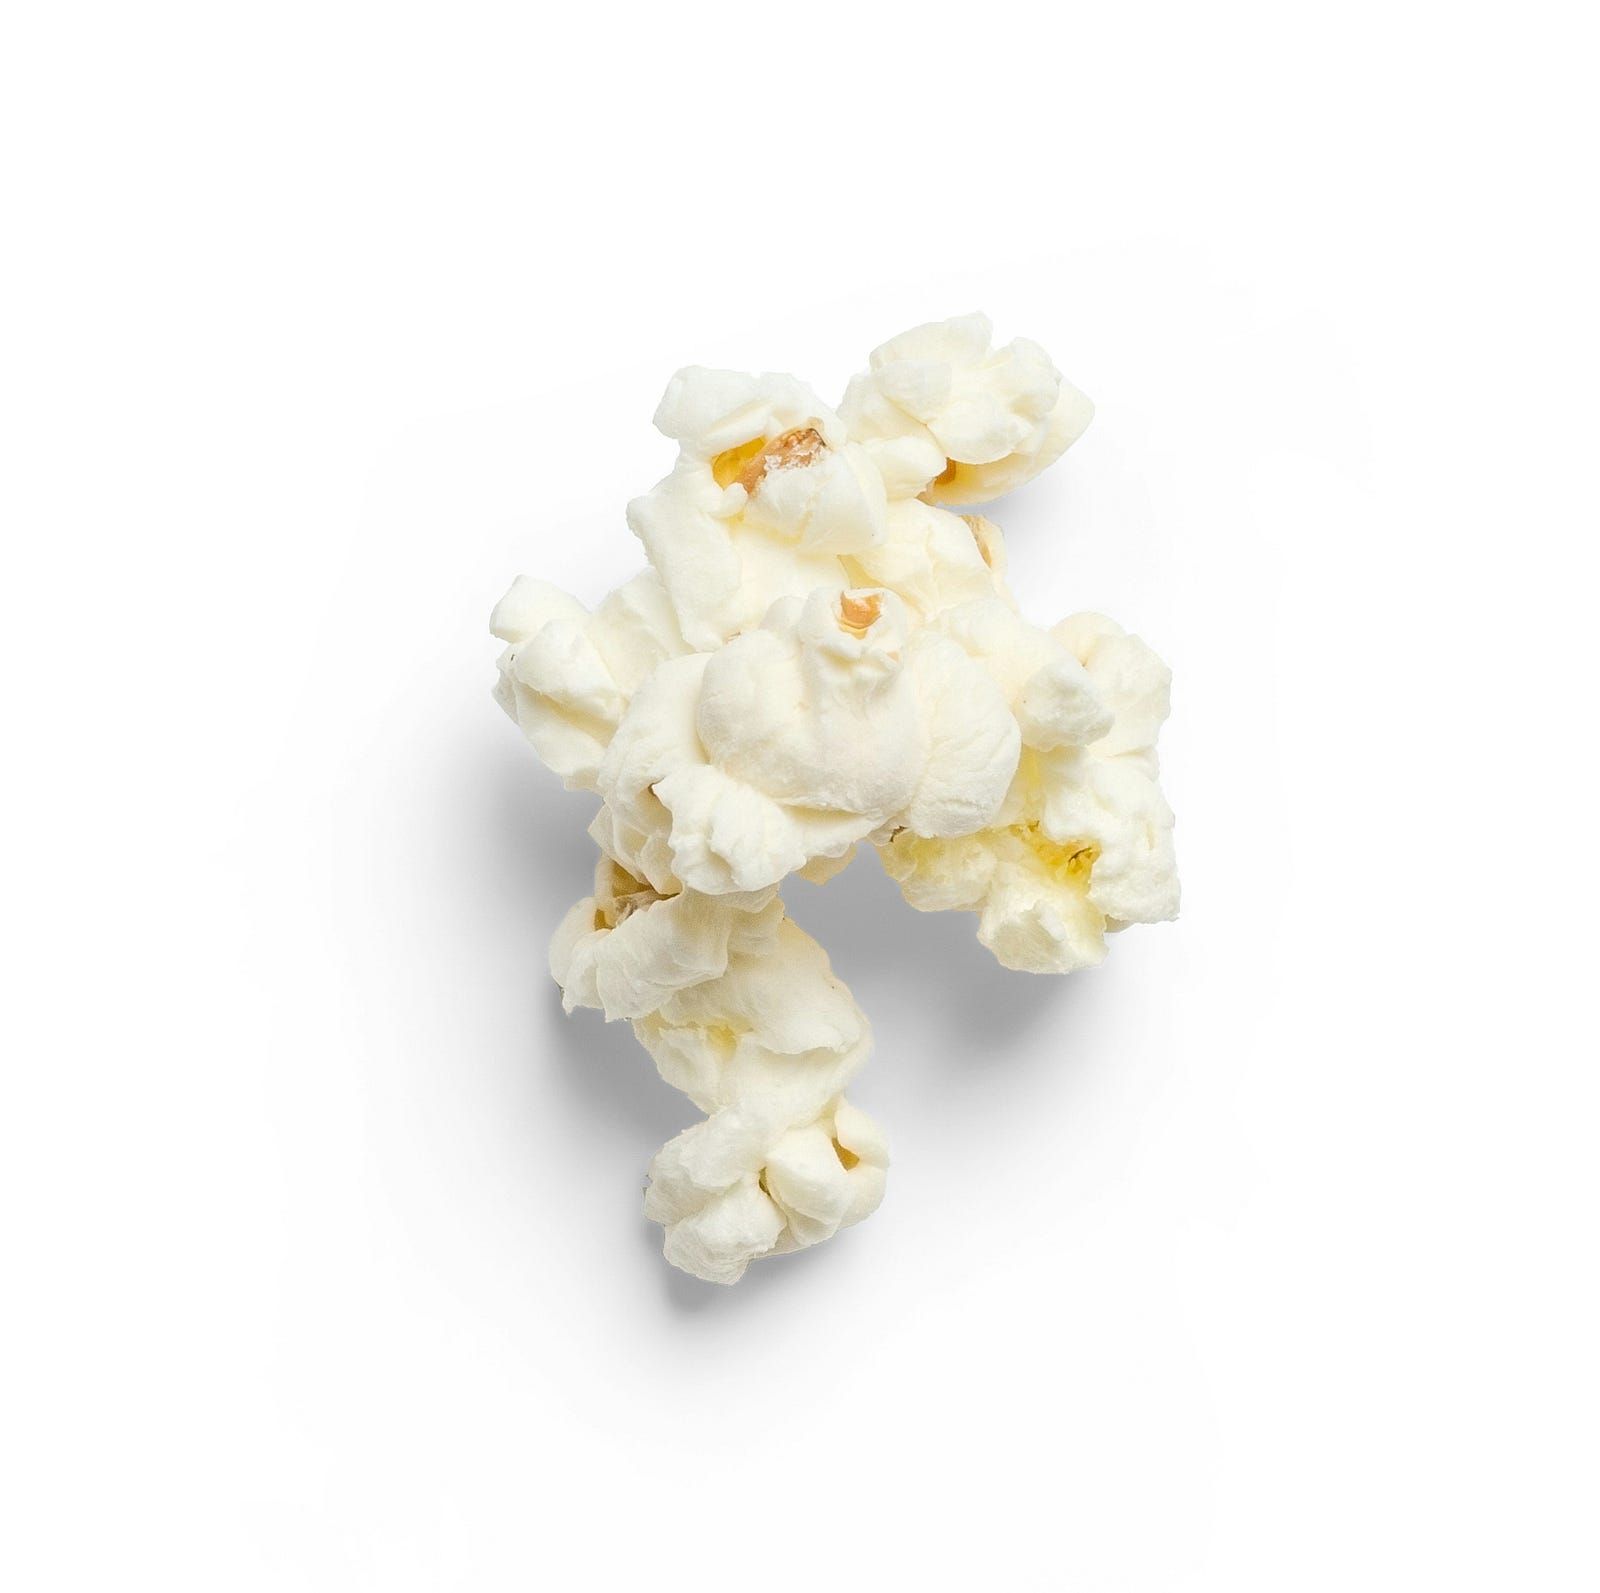 A single piece of popcorn. Popcorn is sometimes ultraprocessed.